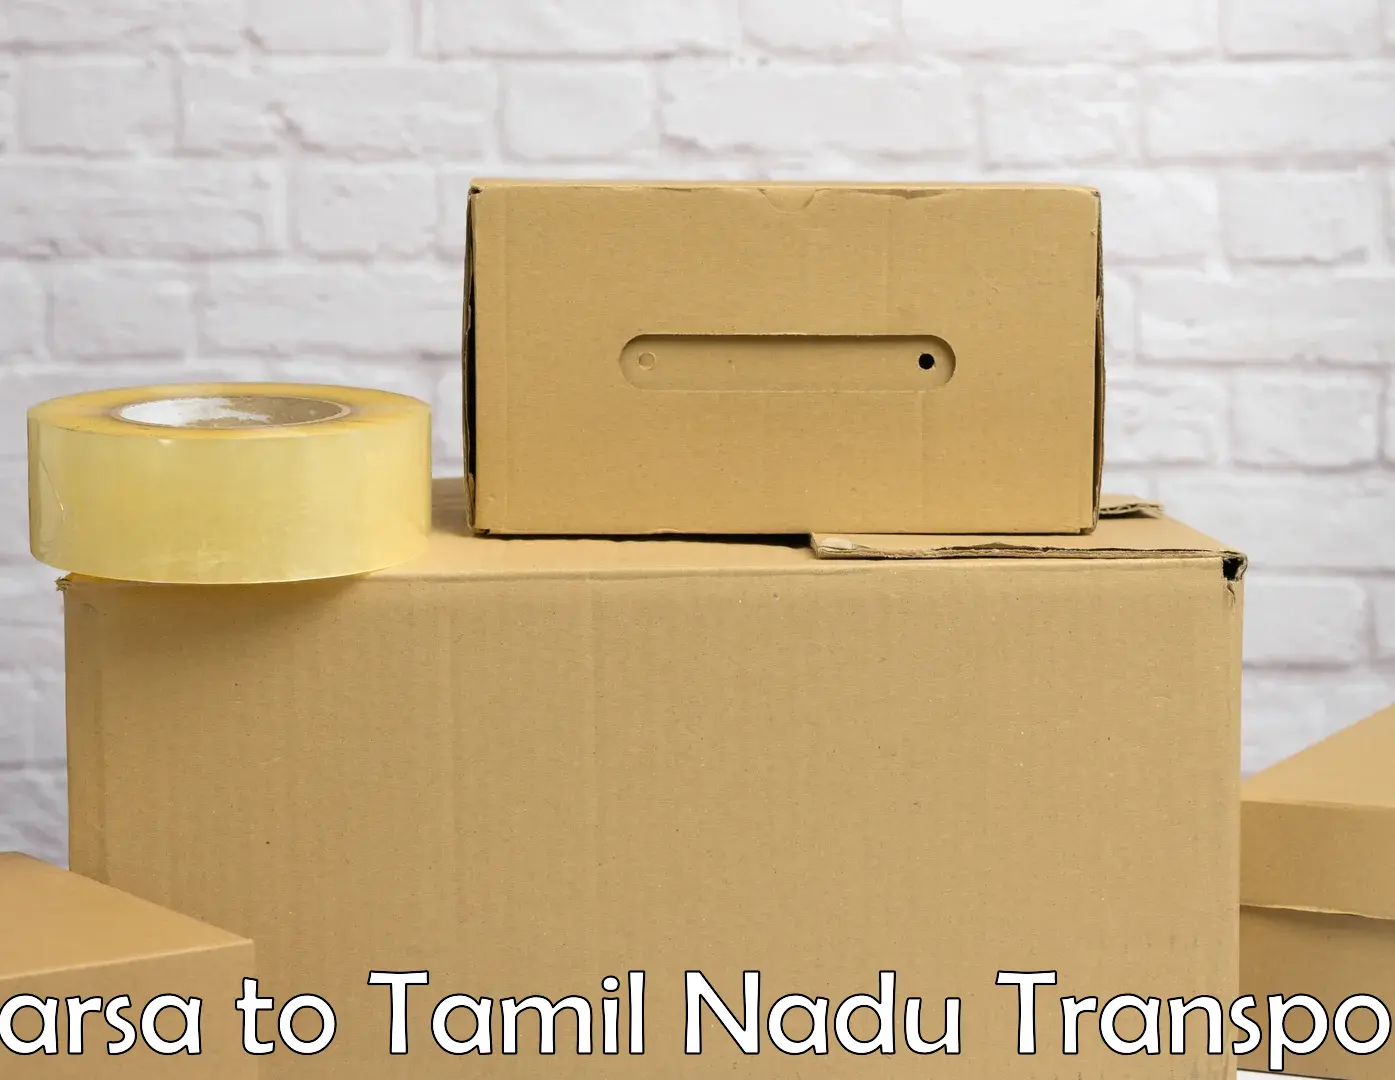 Transport in sharing Parsa to Tamil Nadu